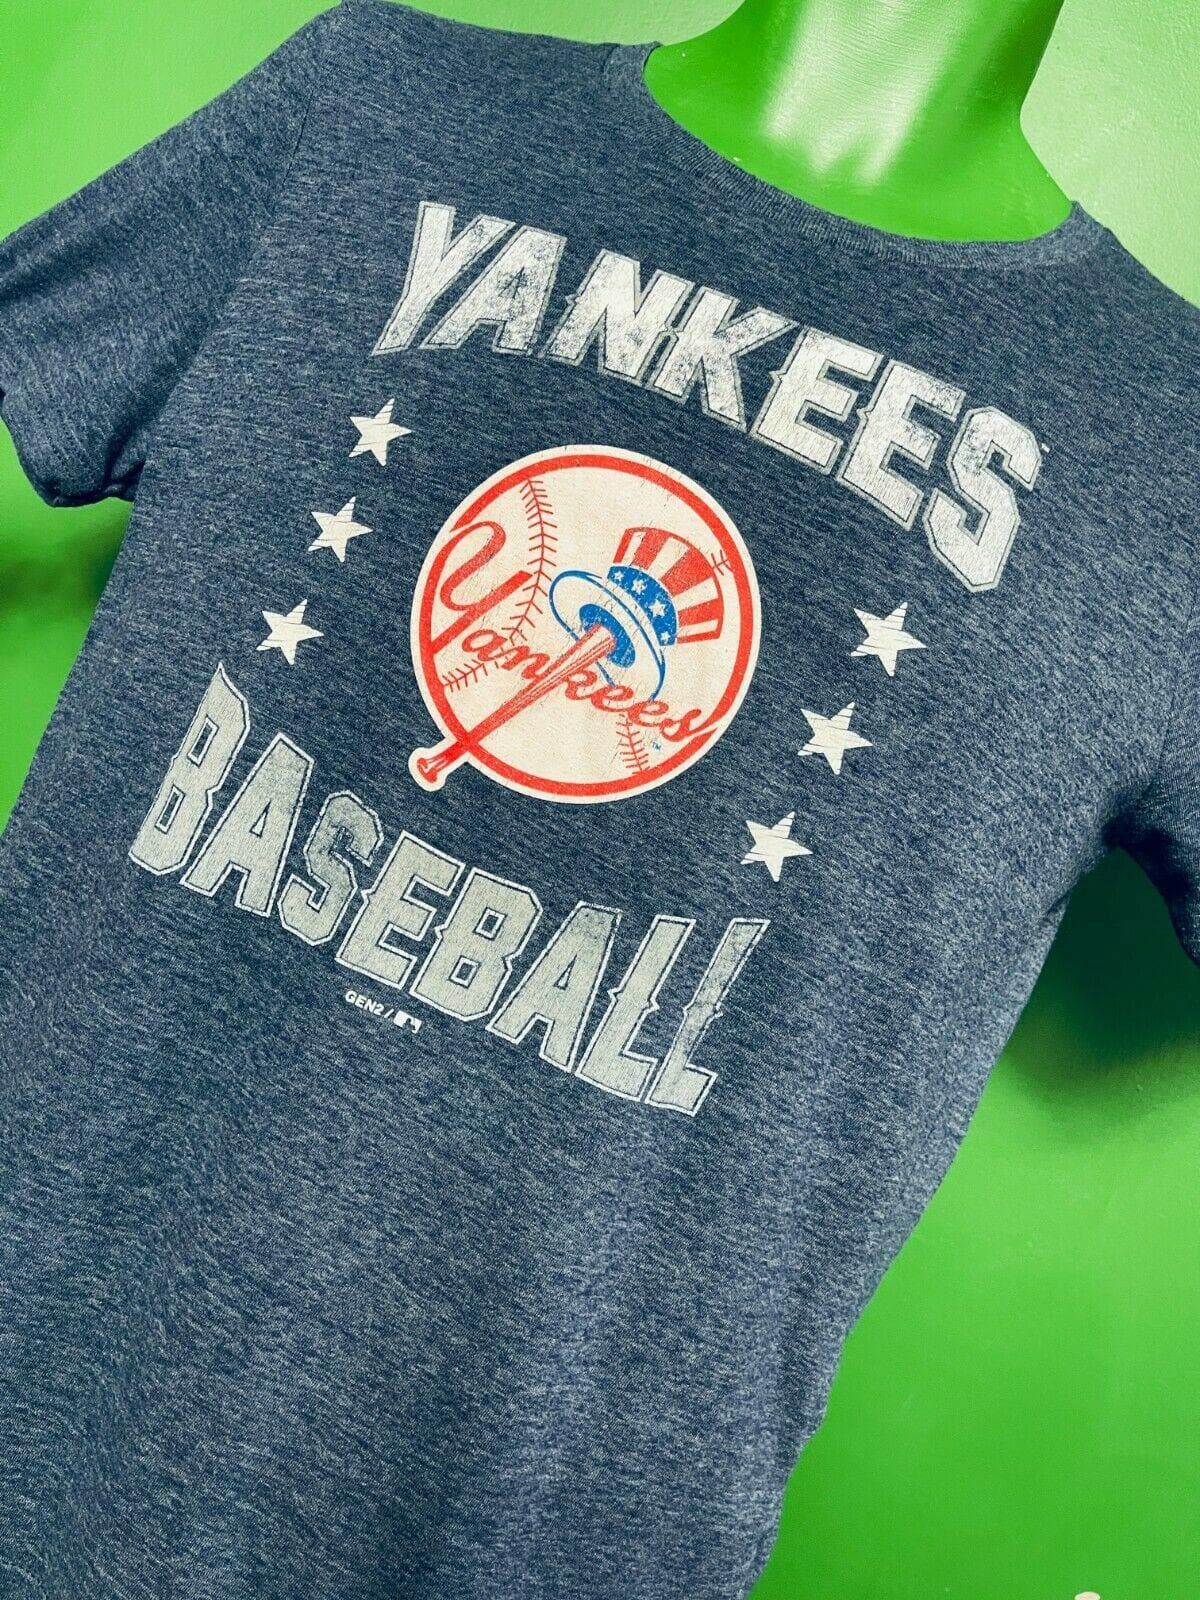 MLB New York Yankees Heathered Blue T-Shirt Youth Large 14-16